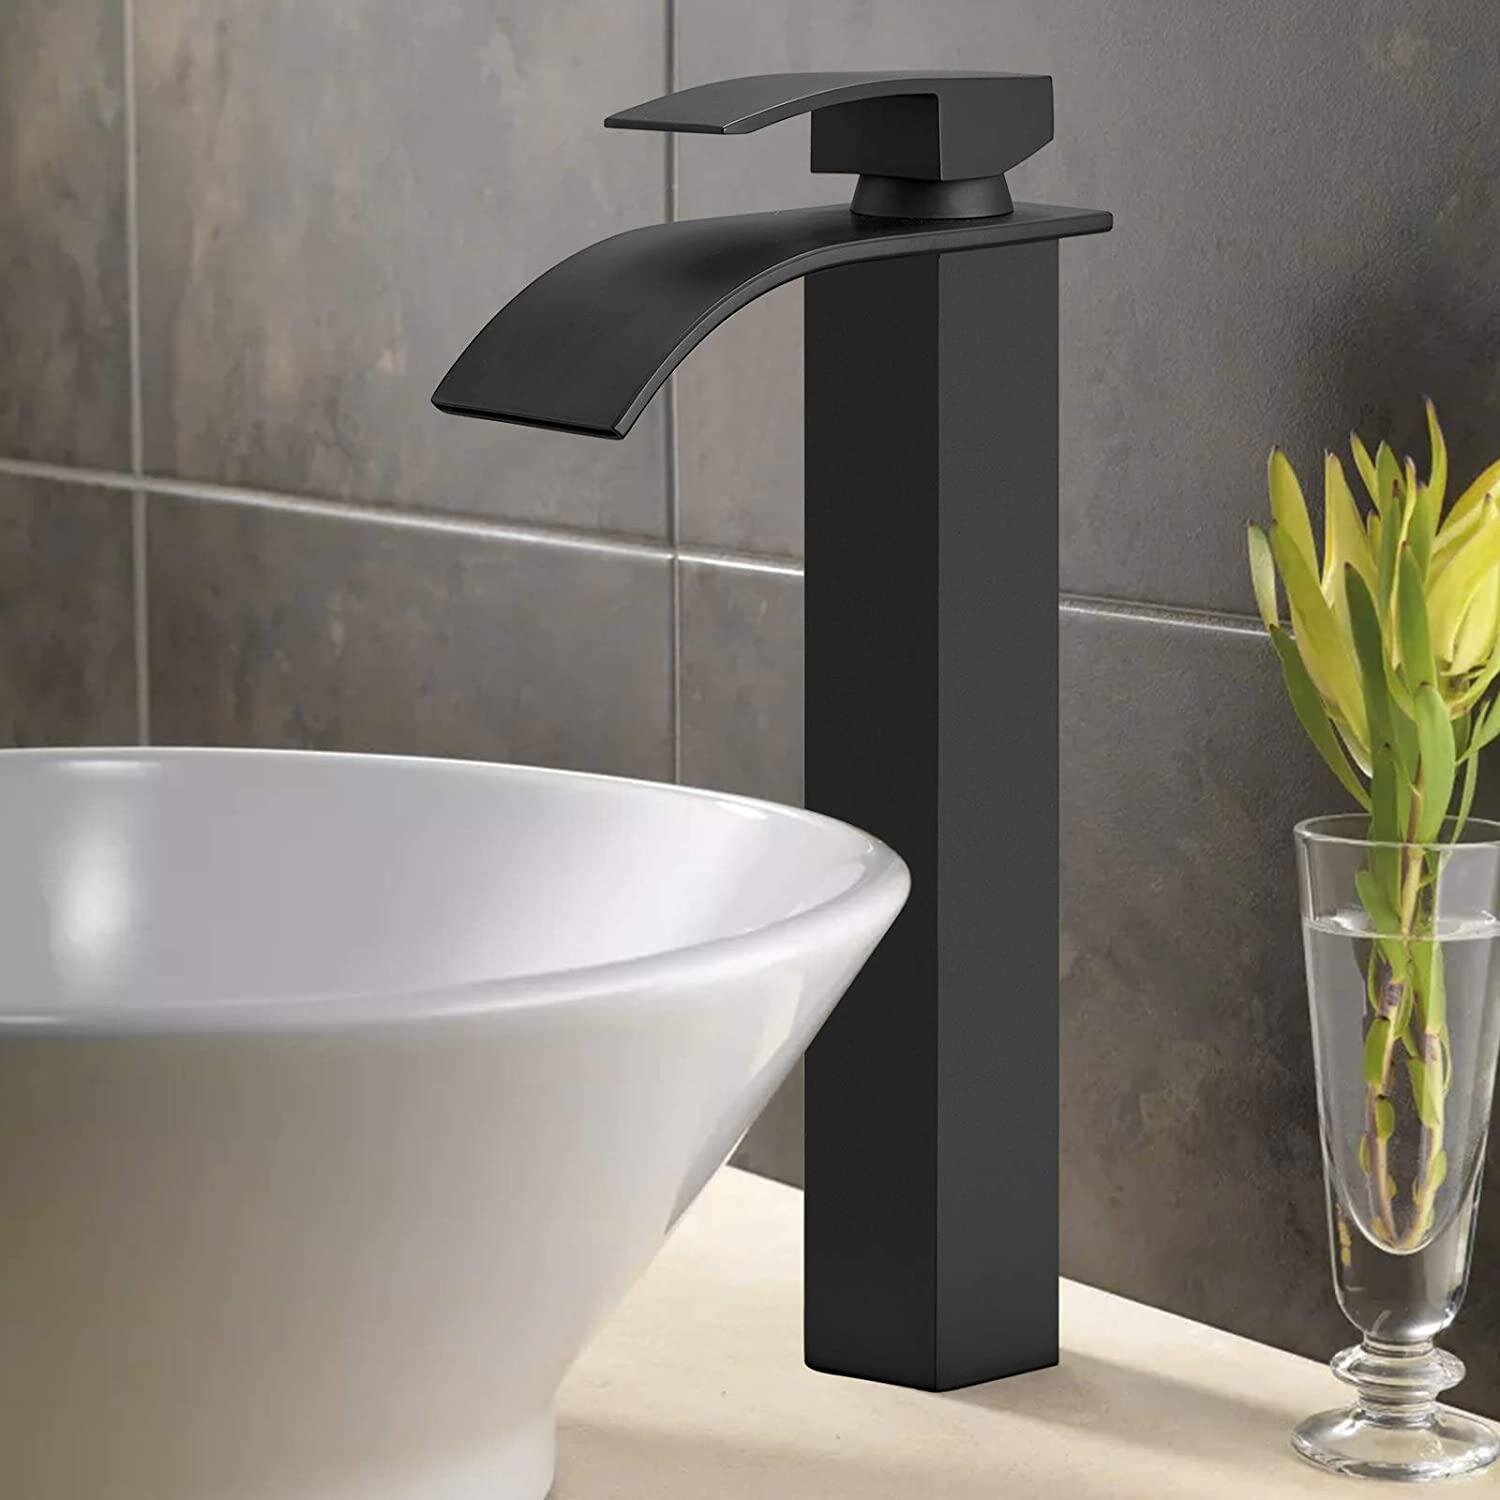 Bathroom Sink Faucet Waterfall Spout Black Tall Mixer Deck Mount Single Hole Tap 